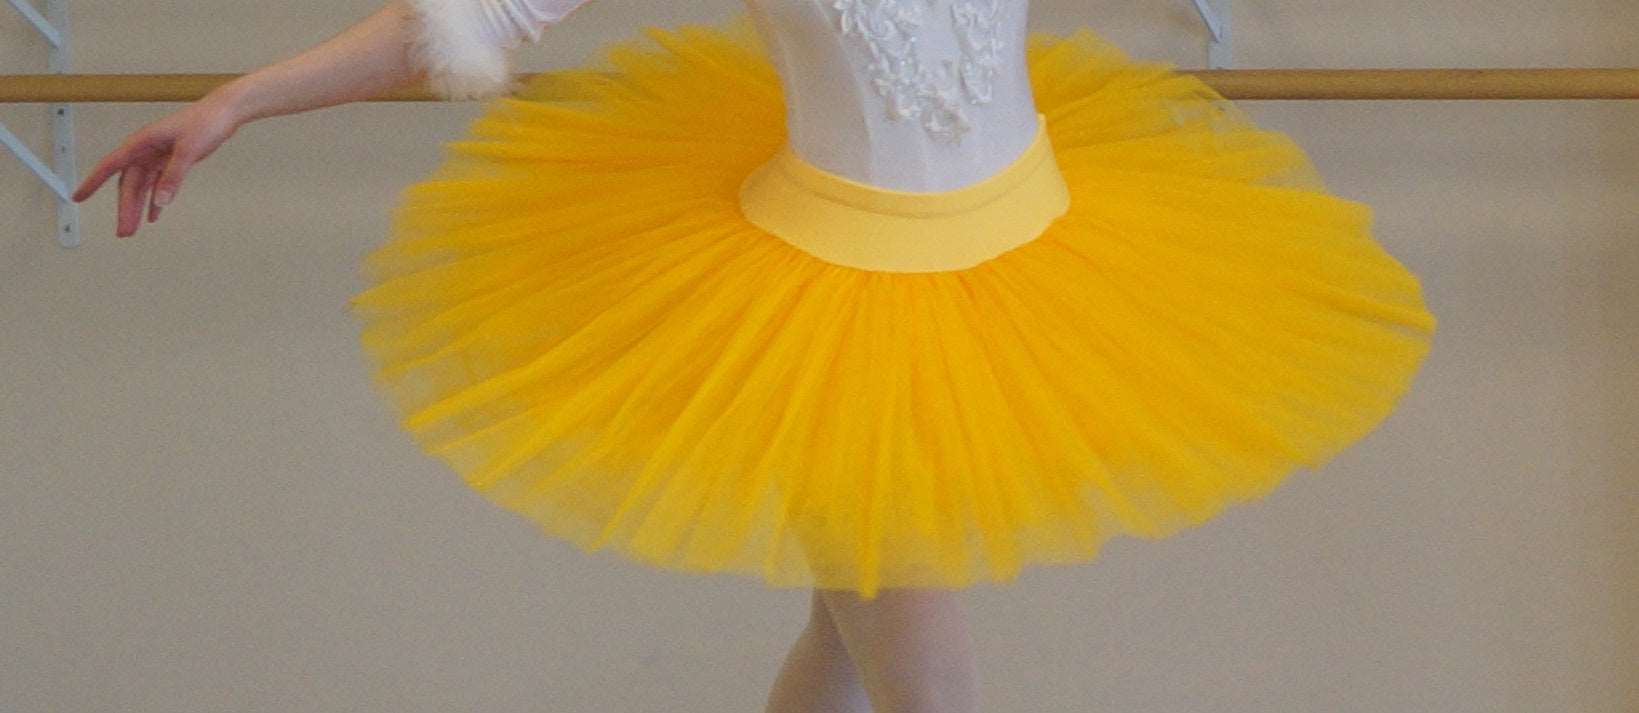 ballet dancer wearing a yellow tutu